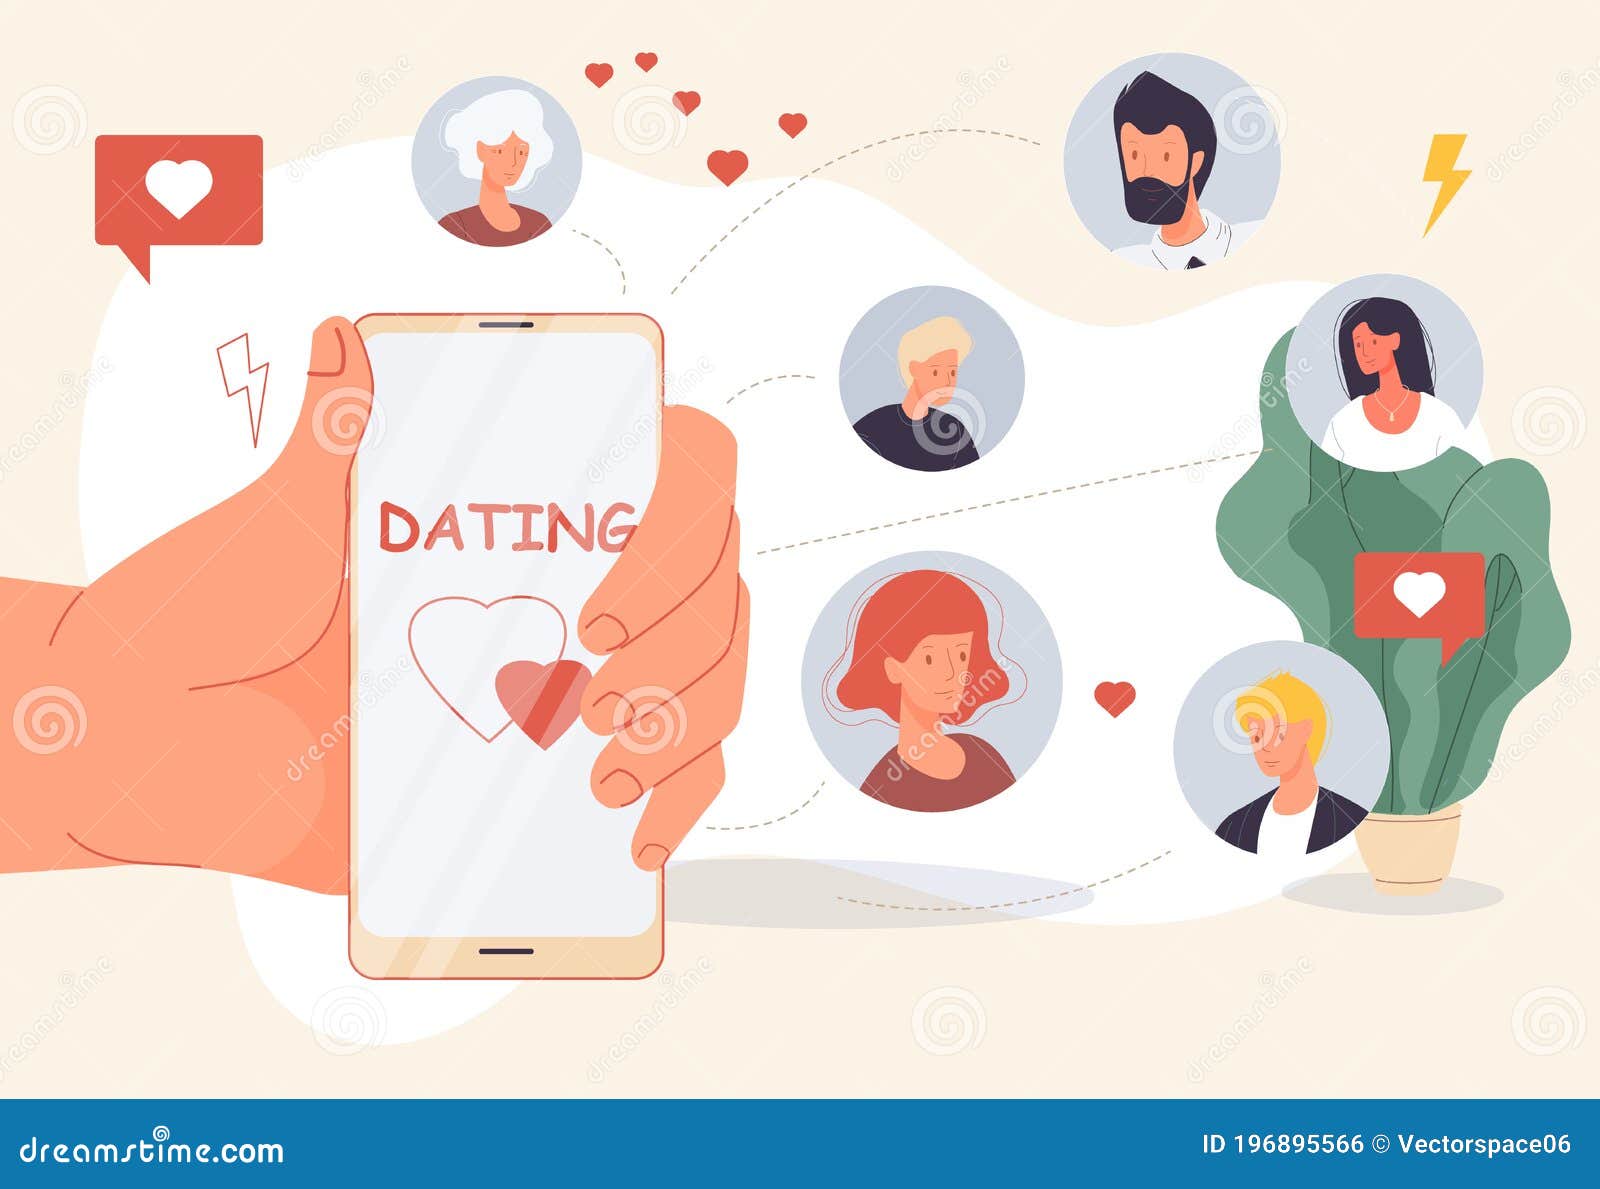 virtual avatar dating